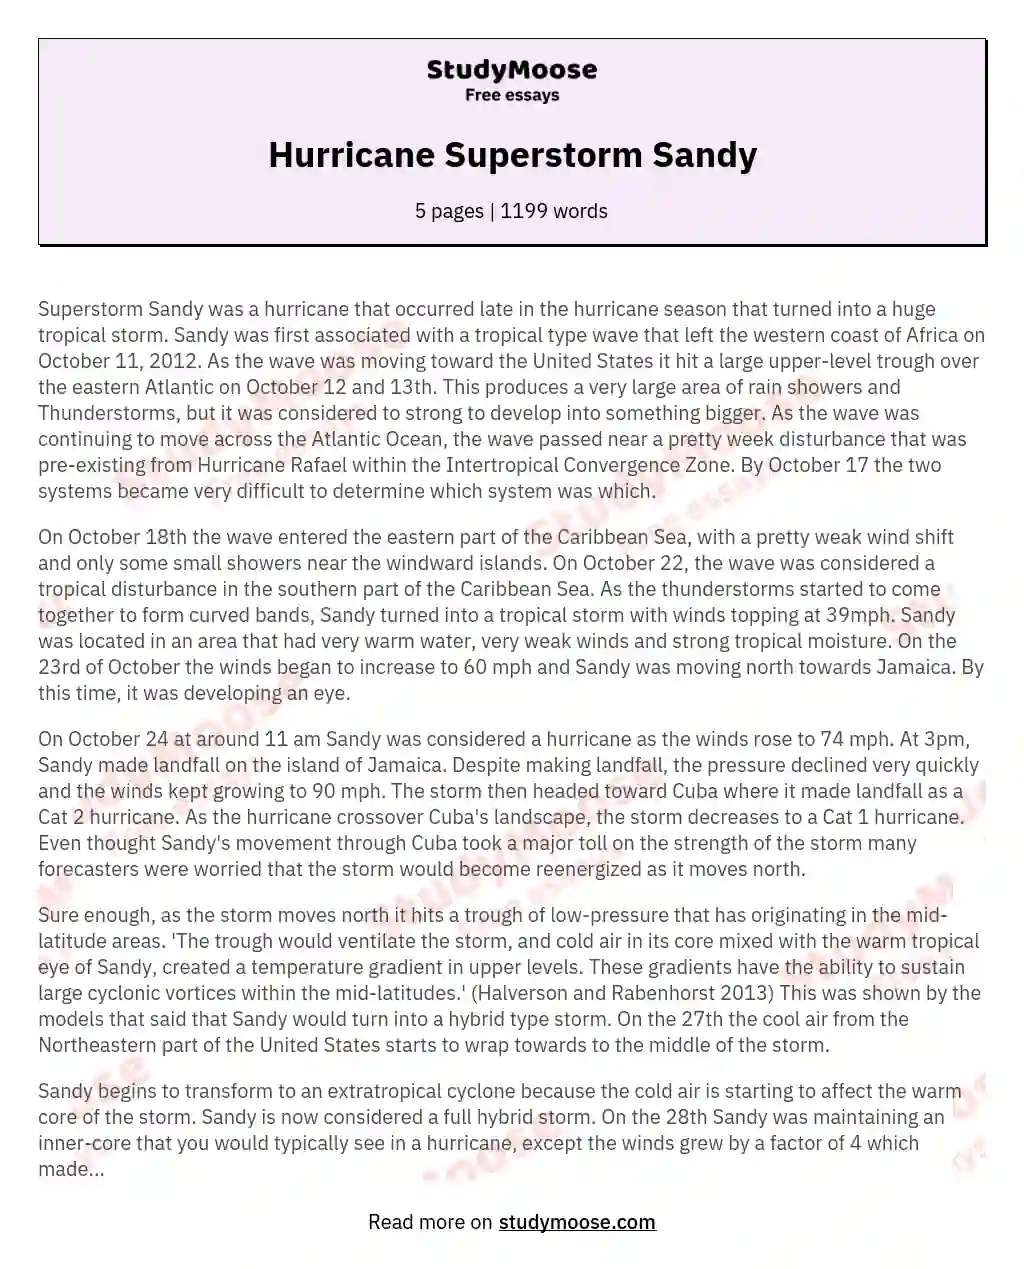 Hurricane Superstorm Sandy